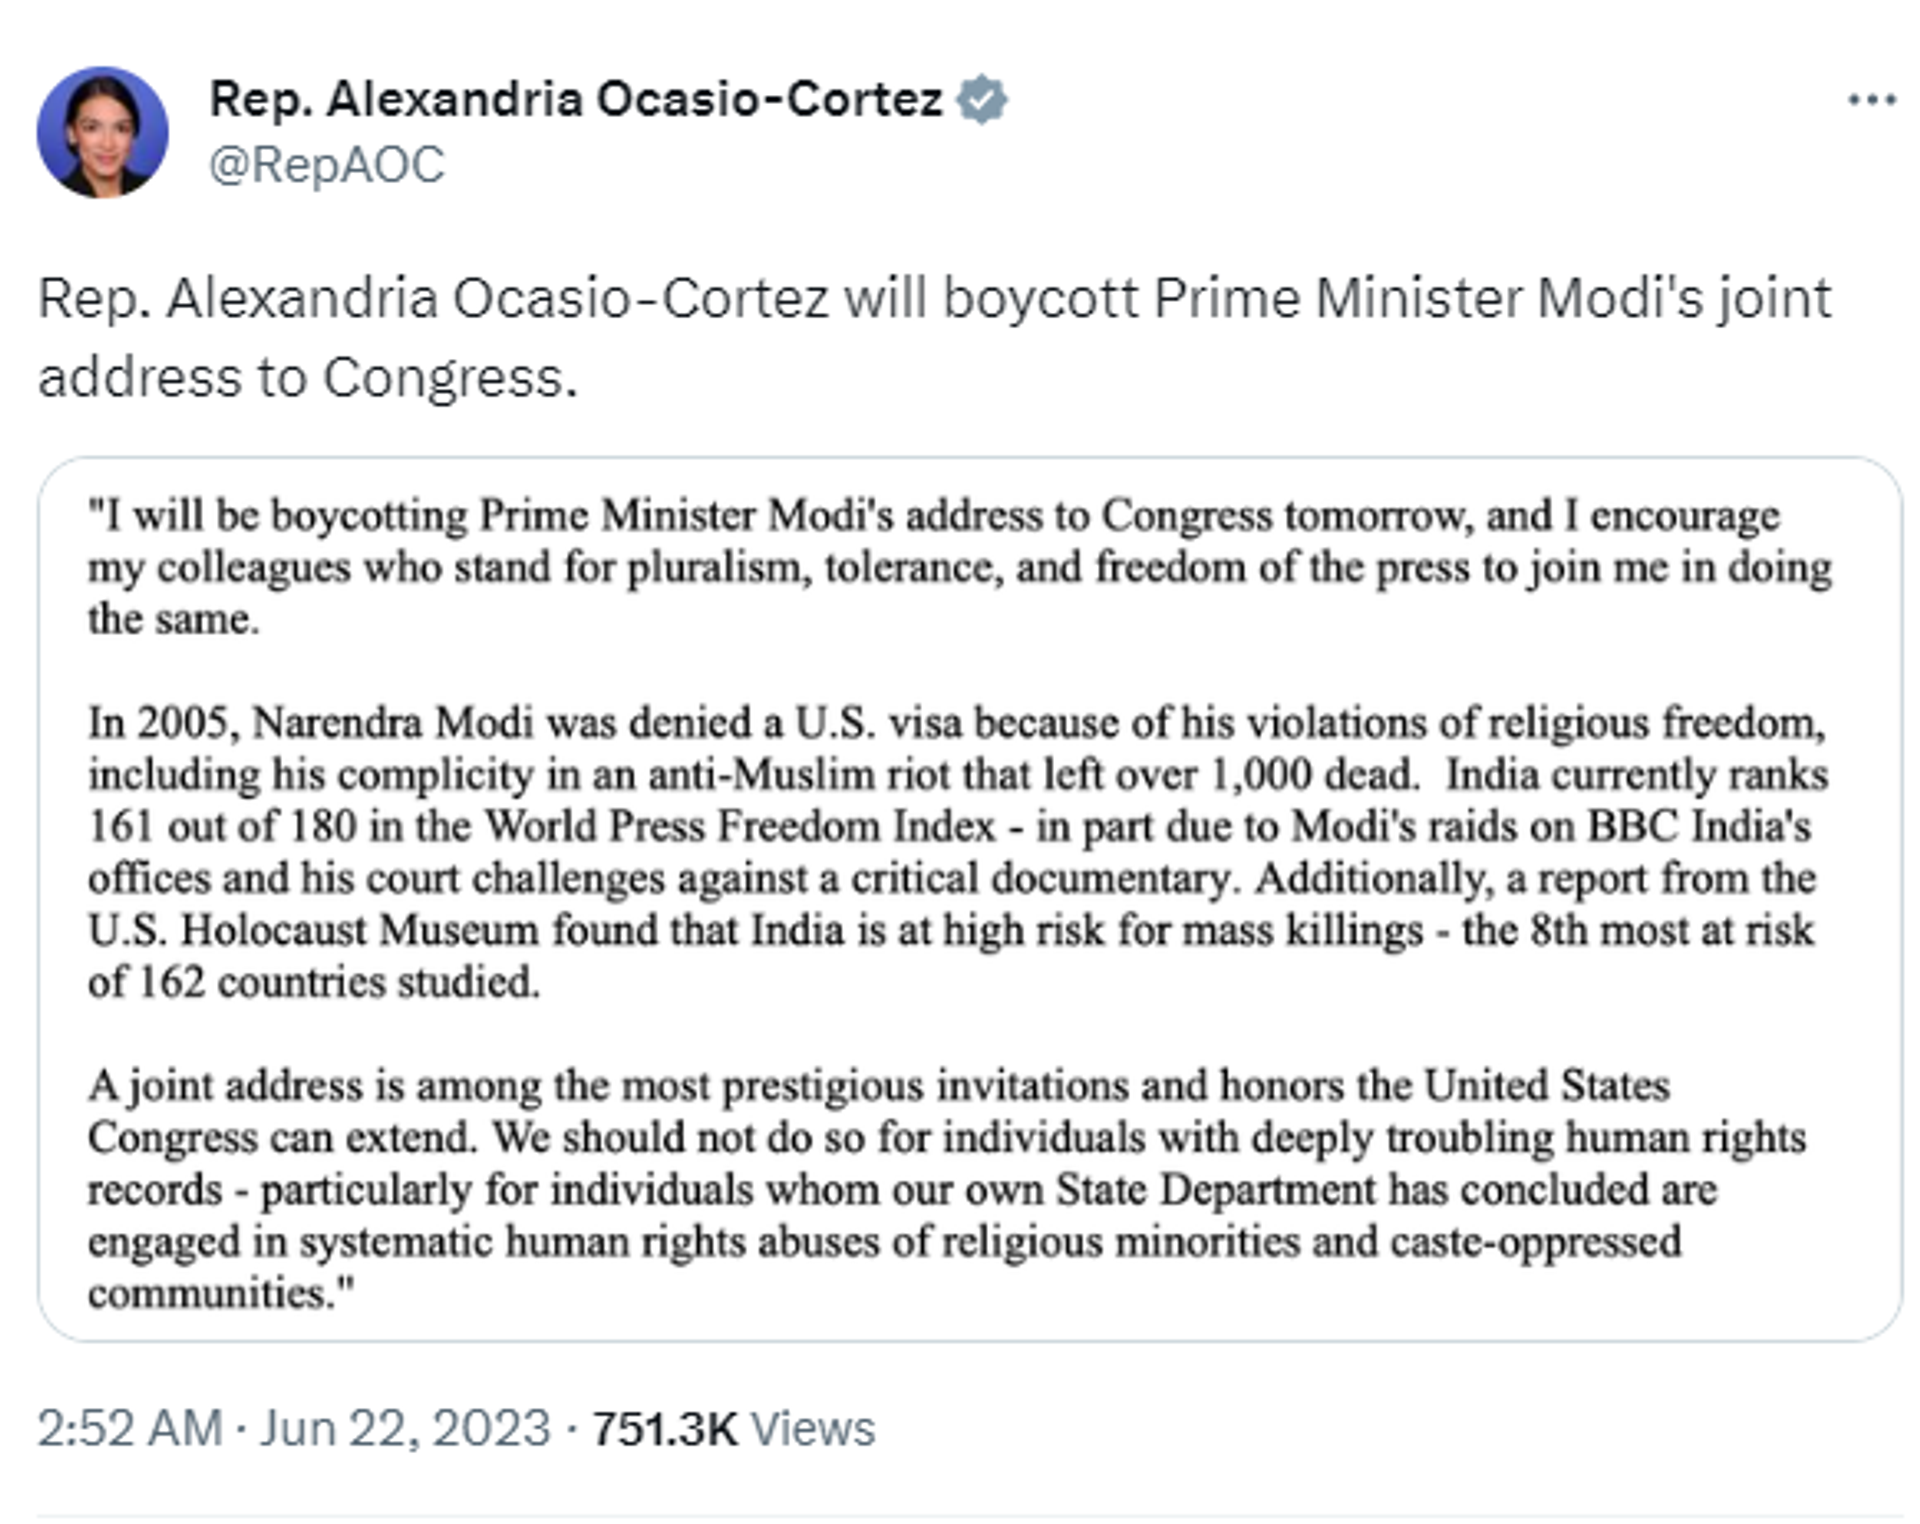 Rep. Alexandria Ocasio-Cortez Tweet  - Sputnik India, 1920, 22.06.2023